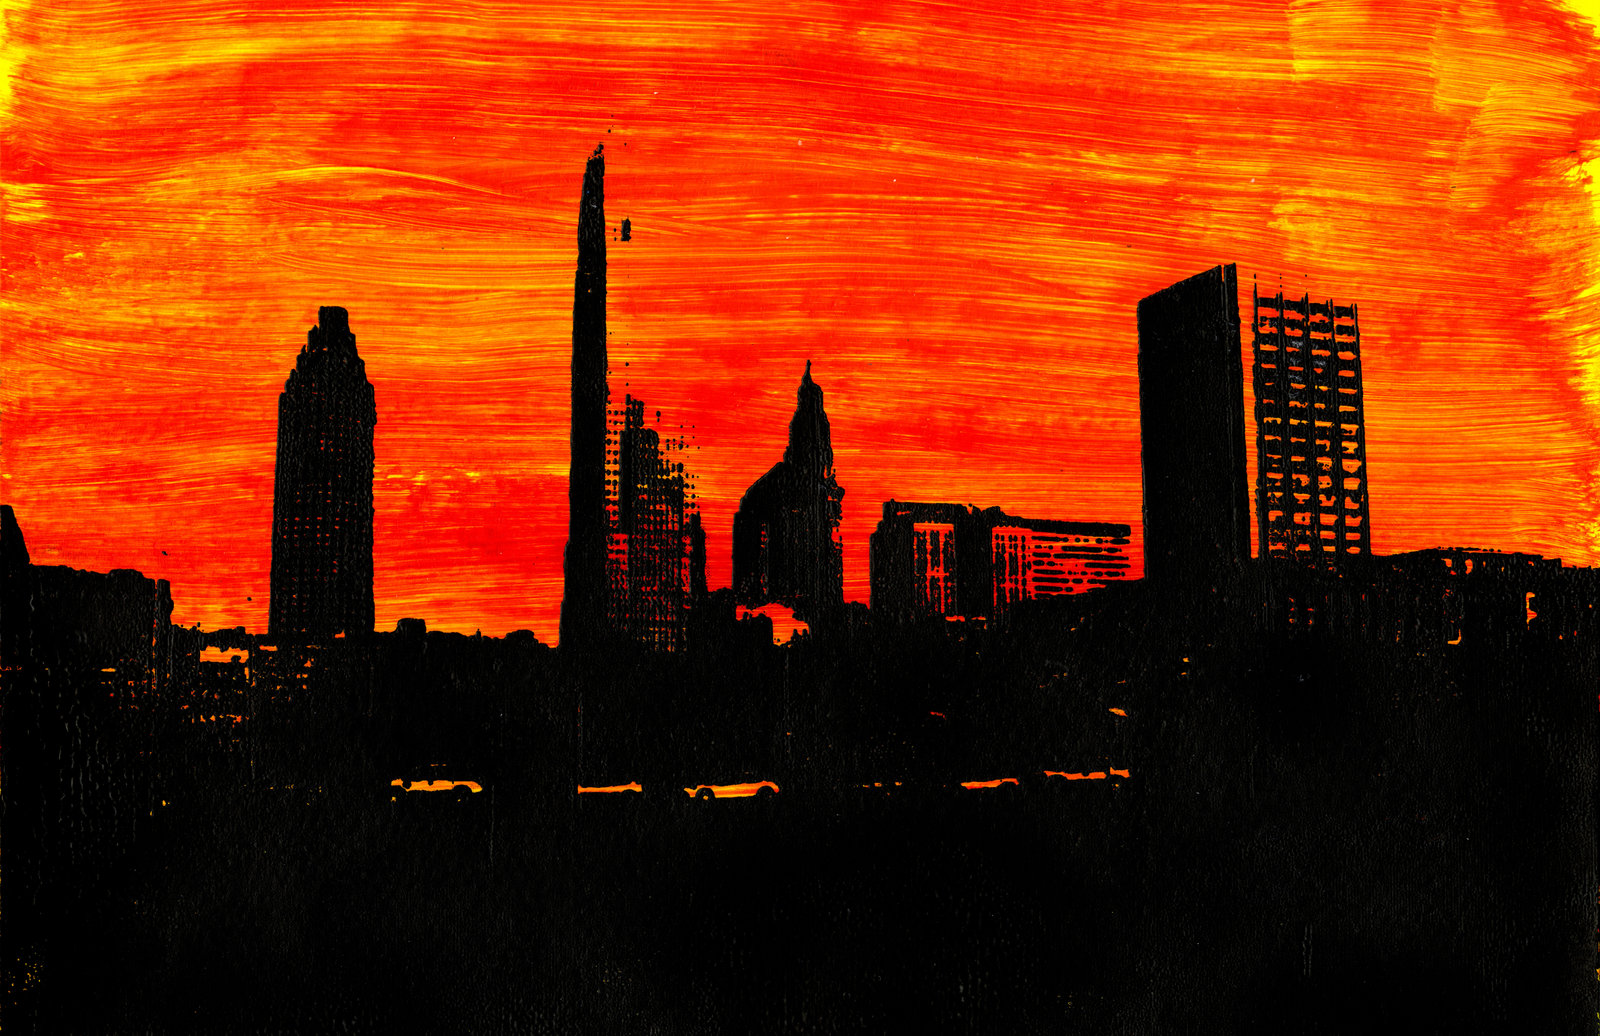 Cleveland Skyline Print by JustMarDesign on DeviantArt